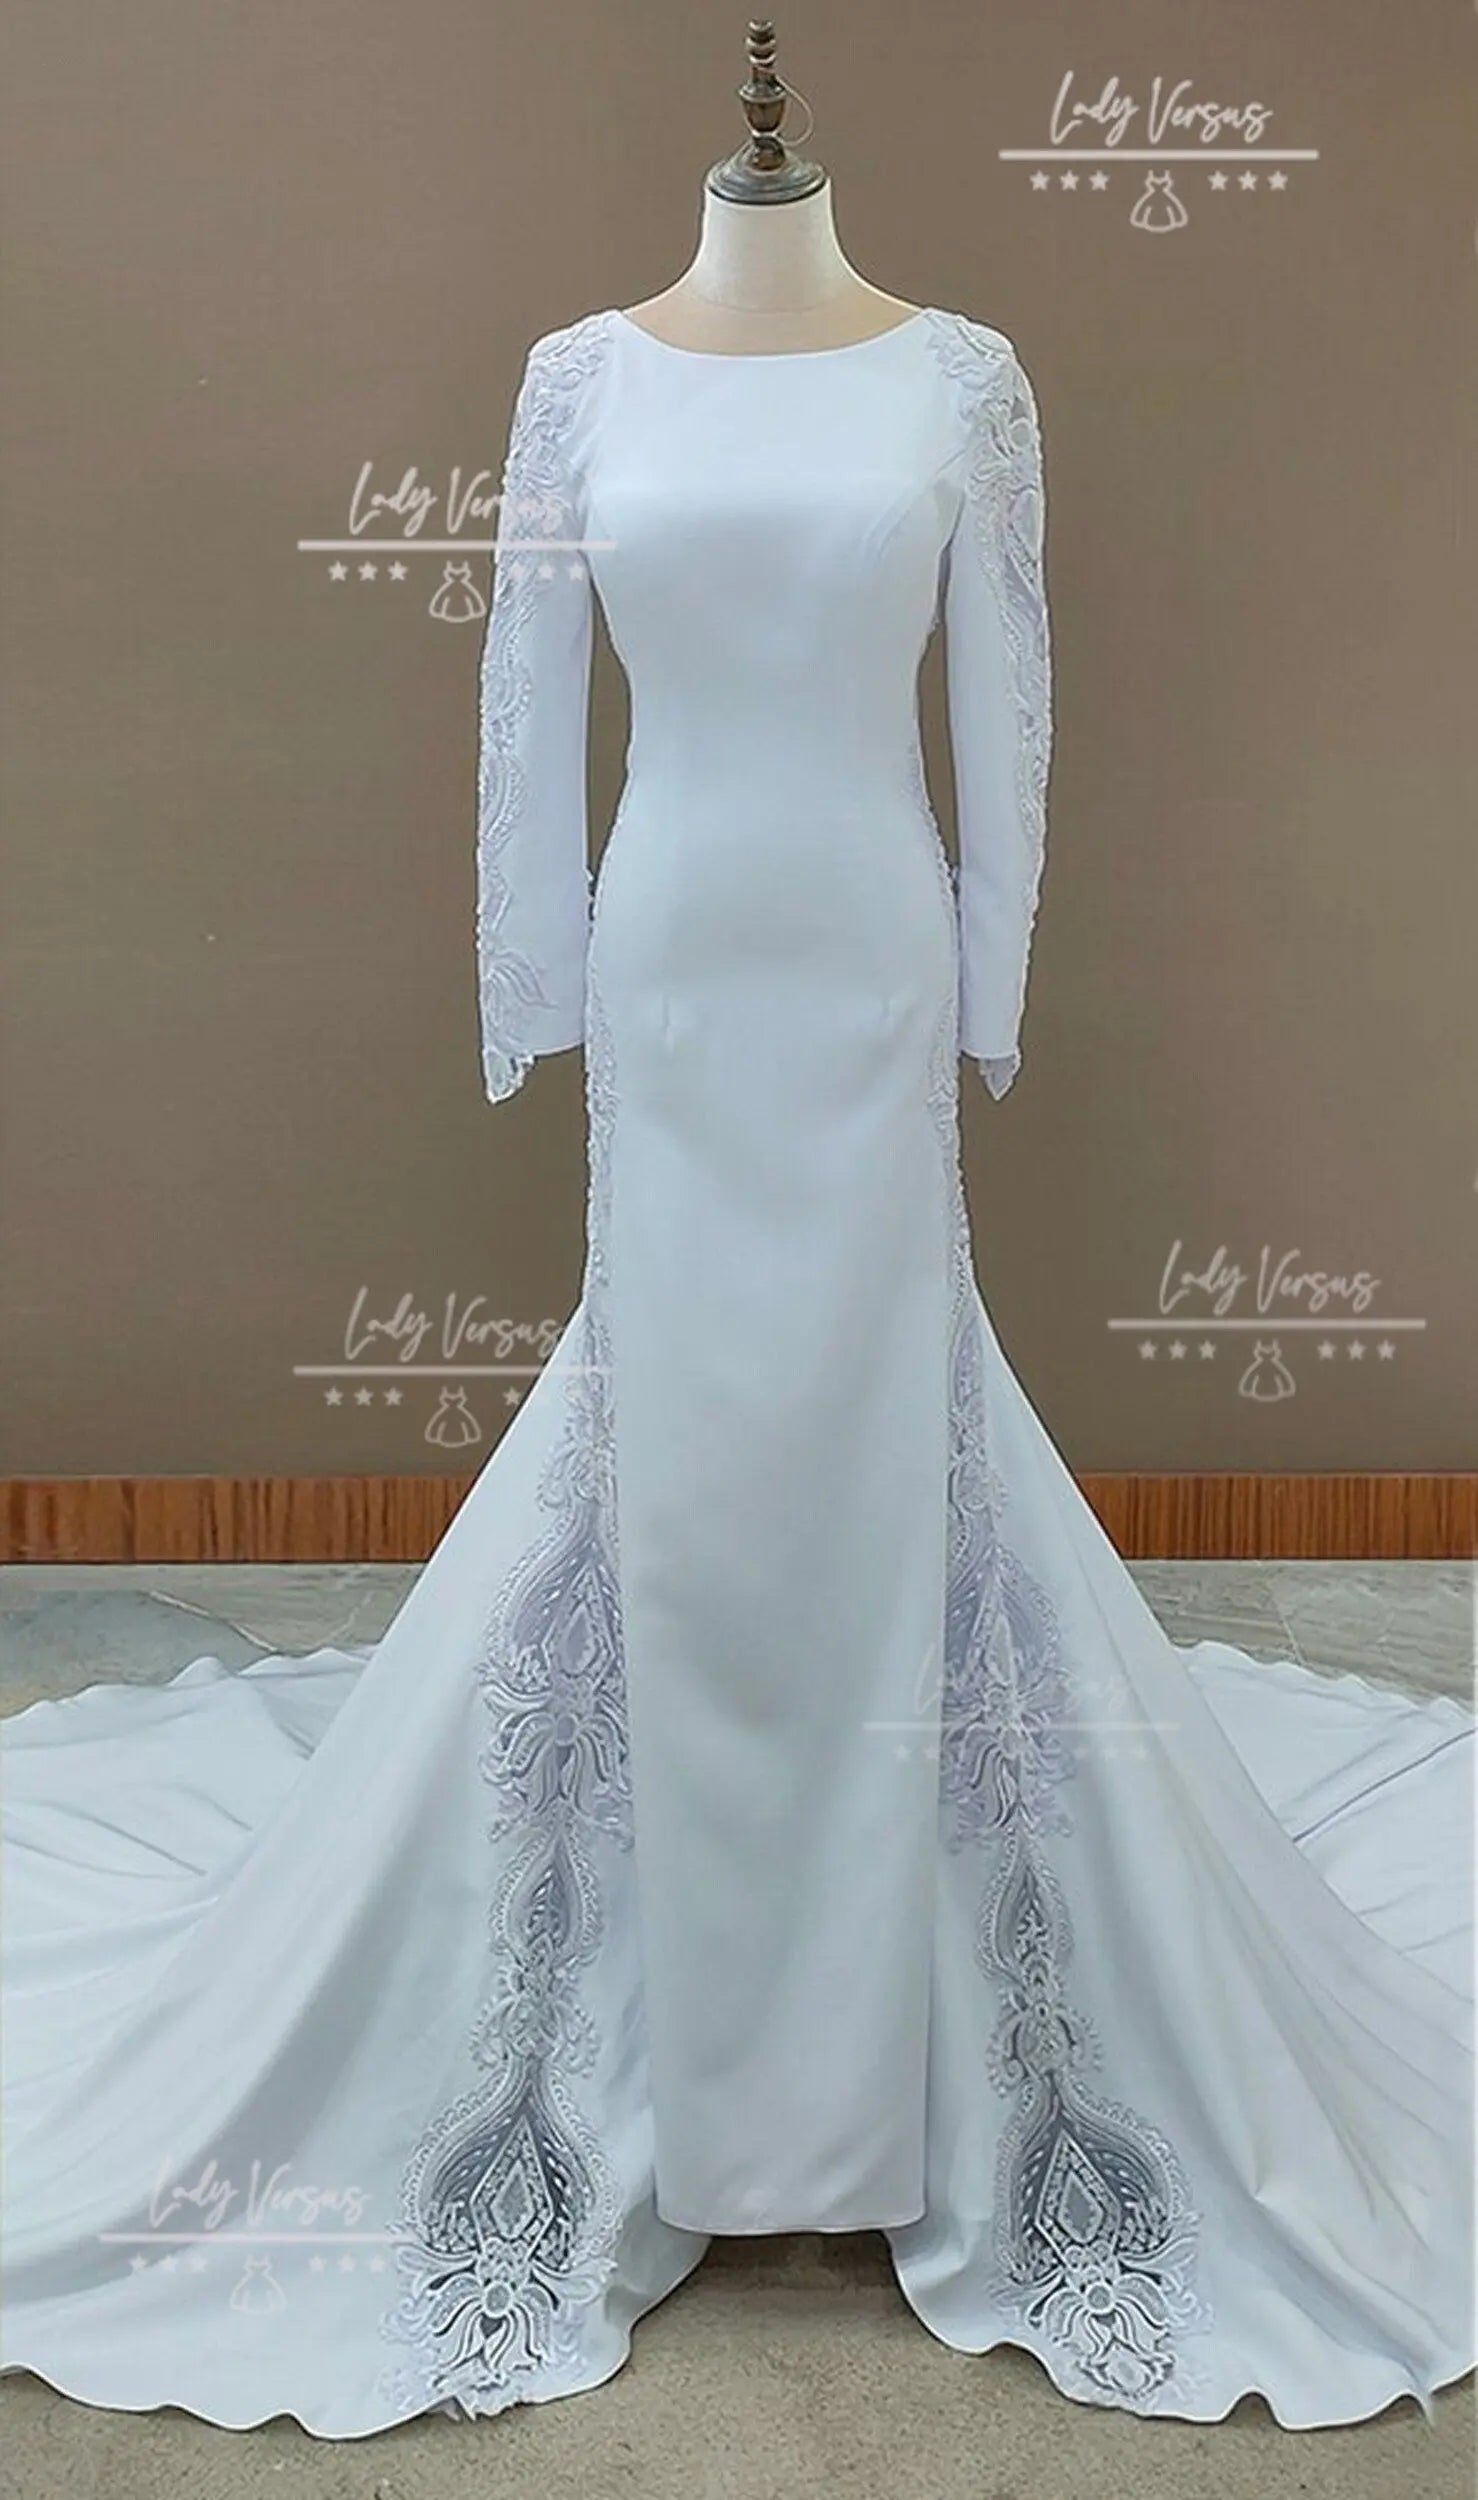 Elegant Satin with embedded lace Wedding  Dress /Beach wedding dress /bridal gown/ bohemian Long train dress/  lace dress long sleeves Lady Versus